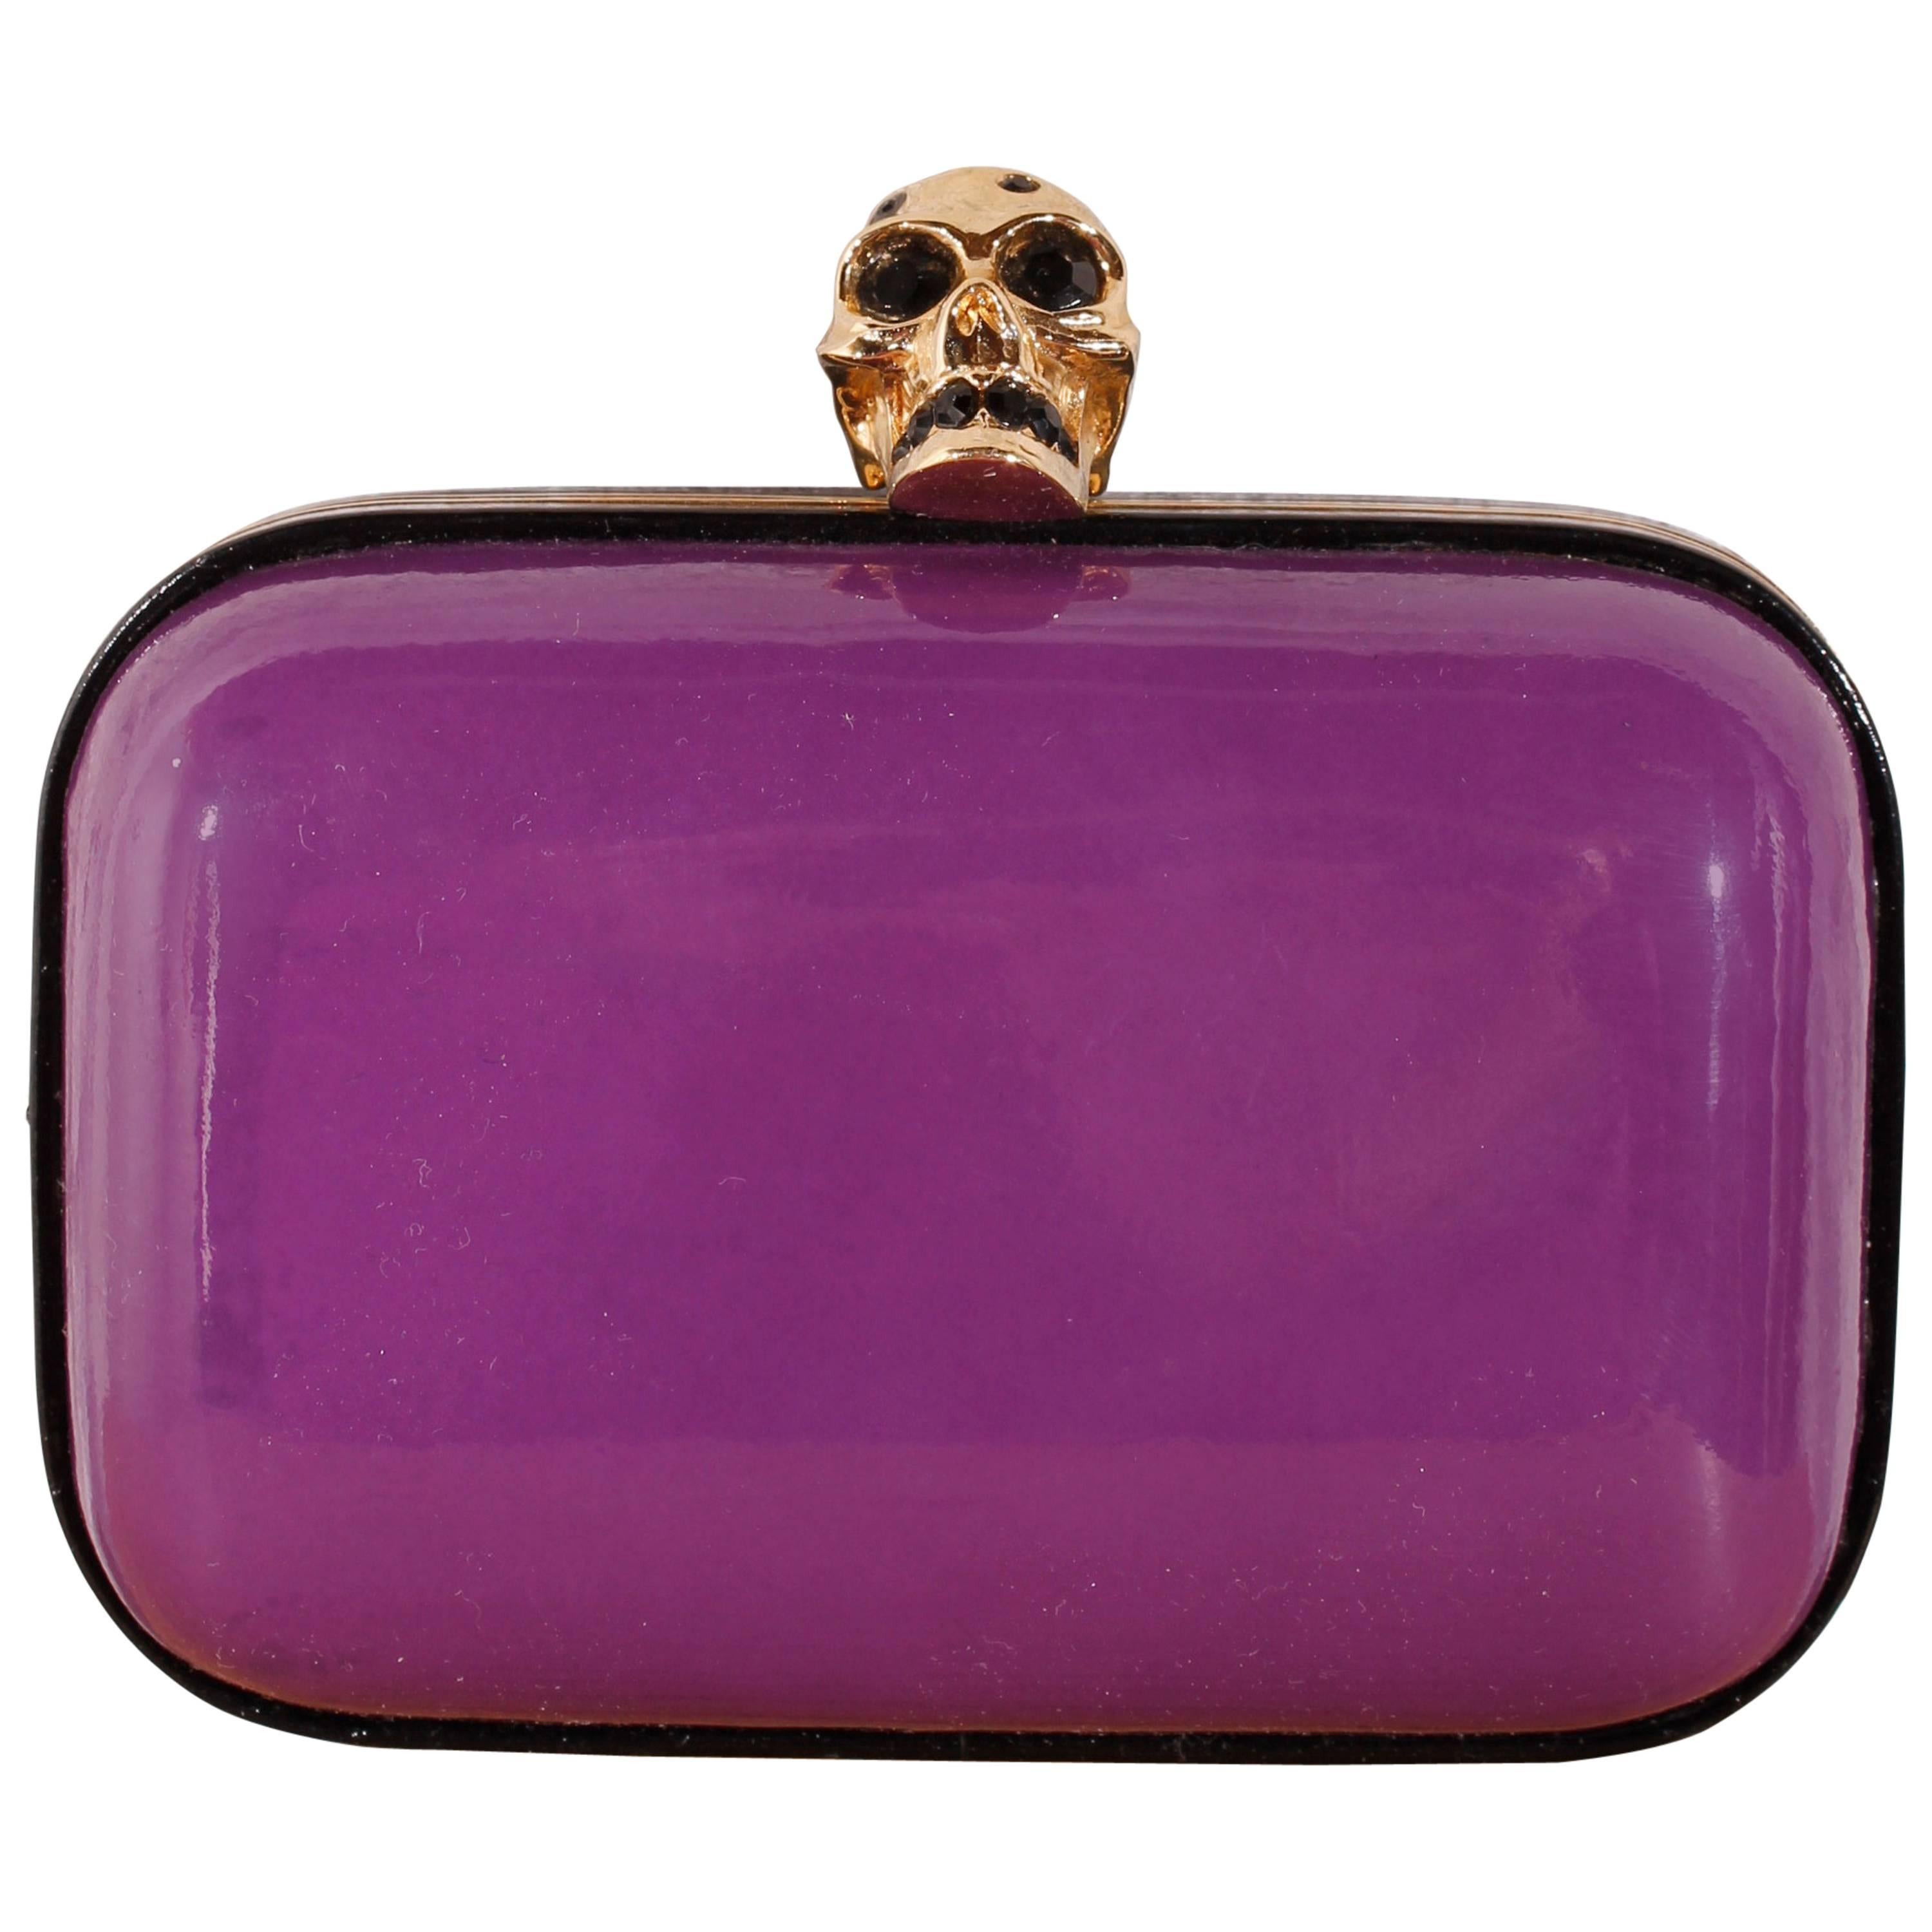 Alexander McQueen Skull Box Clutch - purple patent leather For Sale